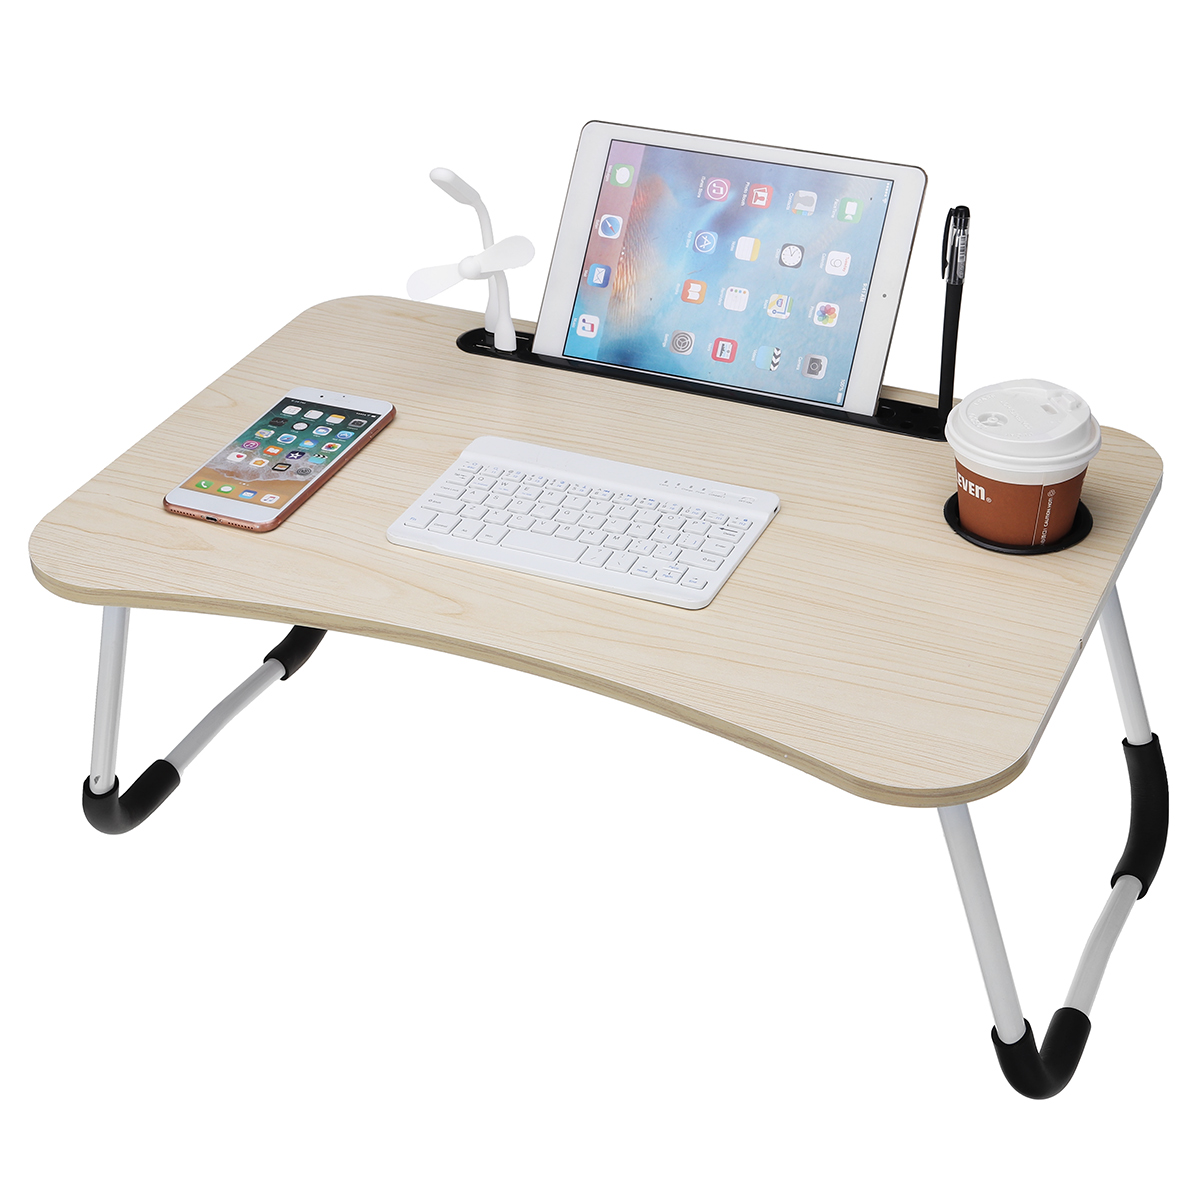 USB-Computer-Desk-Multifunctional-Portable-Bed-Computer-Desk-Lazy-Foldable-Lazy-Laptop-Table-for-Hom-1776388-19